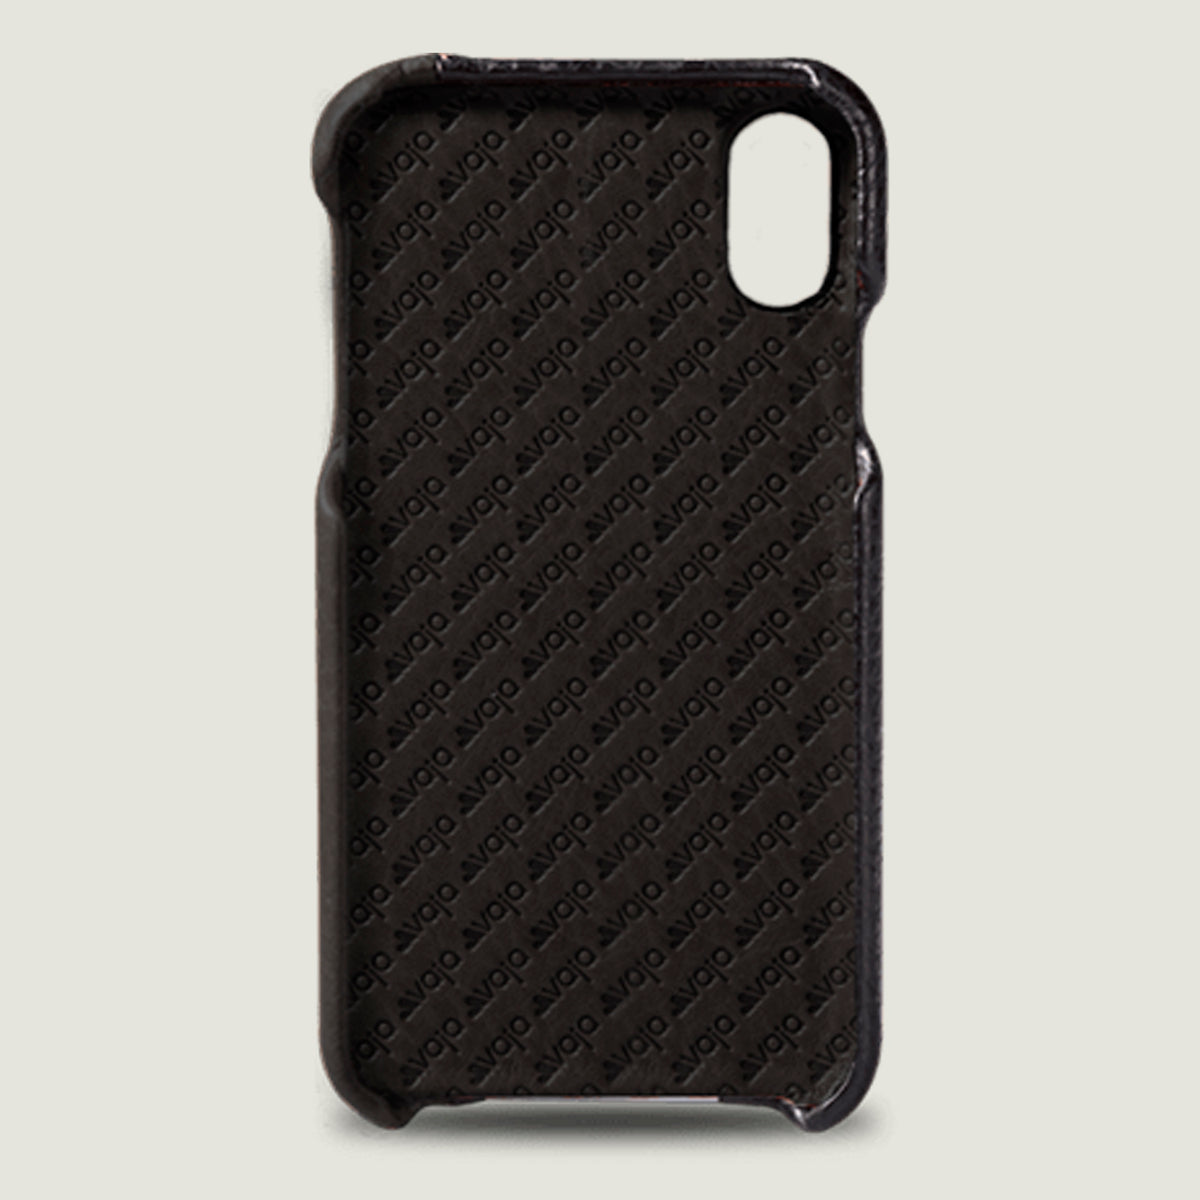 Grip LP iPhone X / iPhone Xs leather case - Vaja